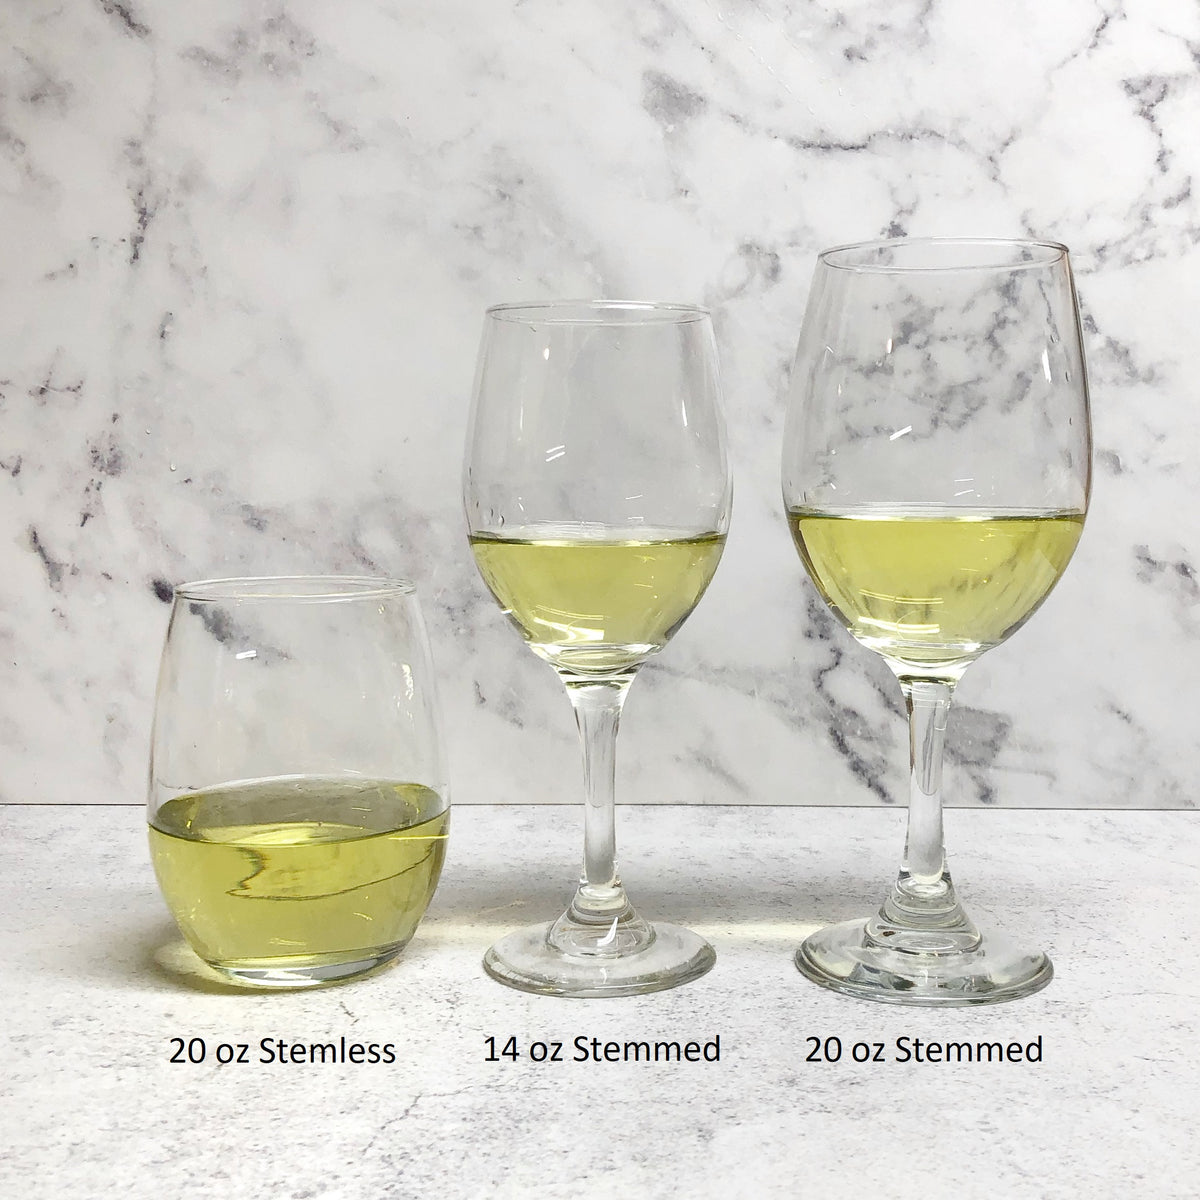 Purple Dragonfly Wine Glasses (Set of 2)